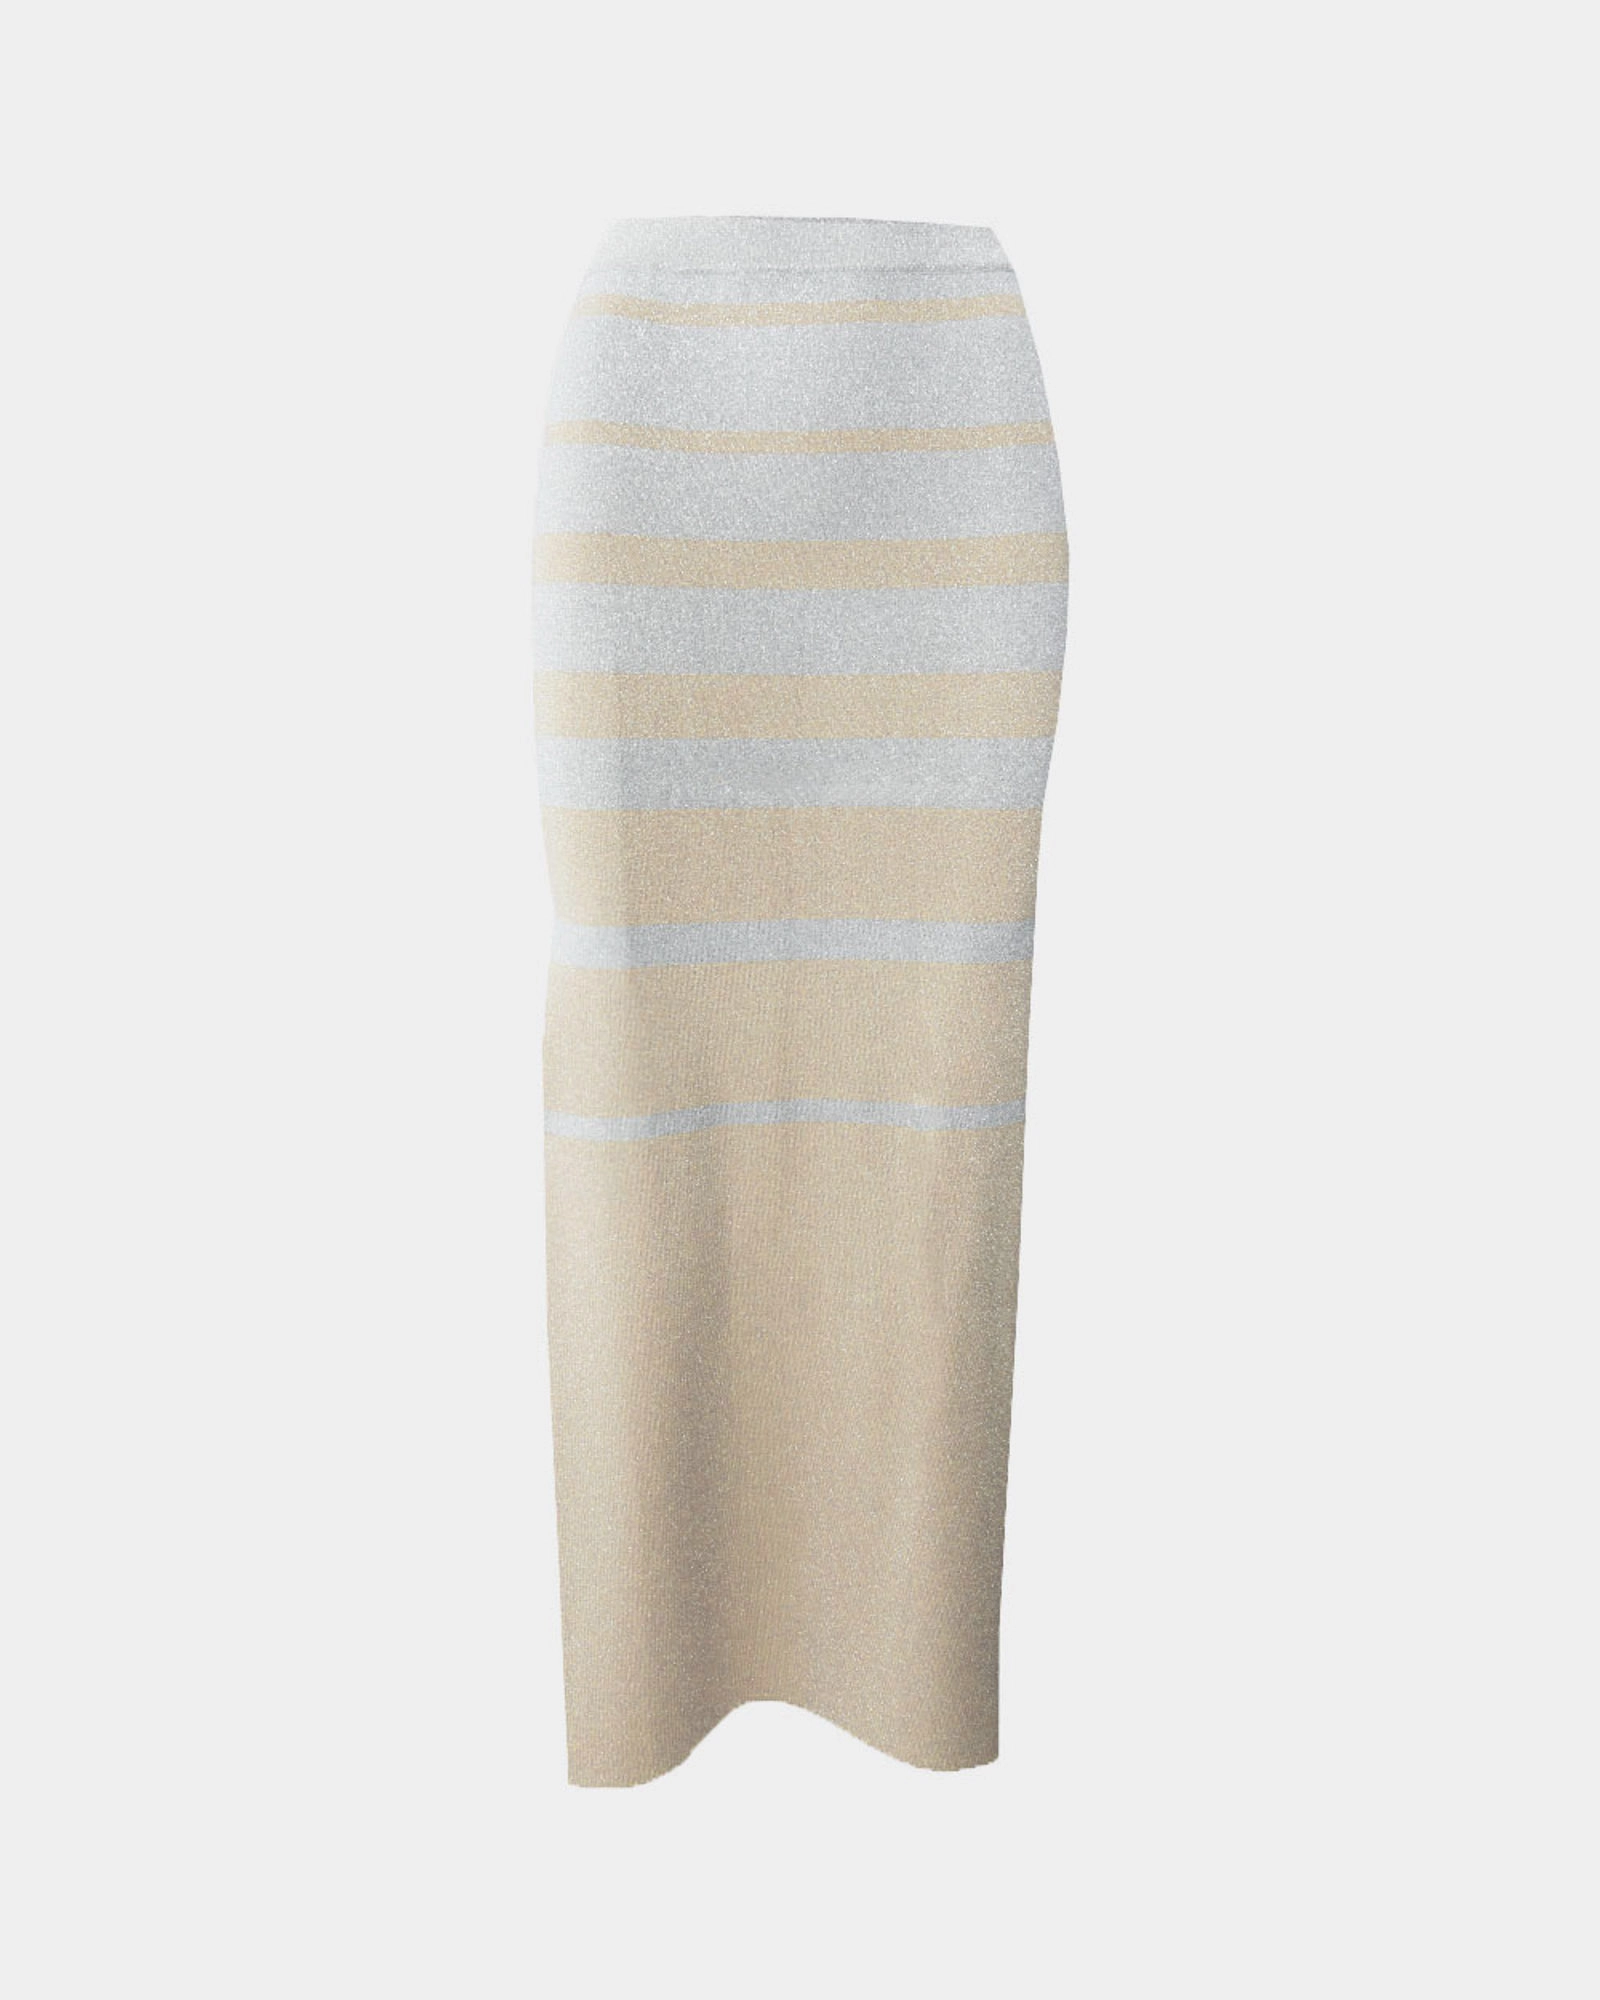 Shay Lurex Knit Skirt